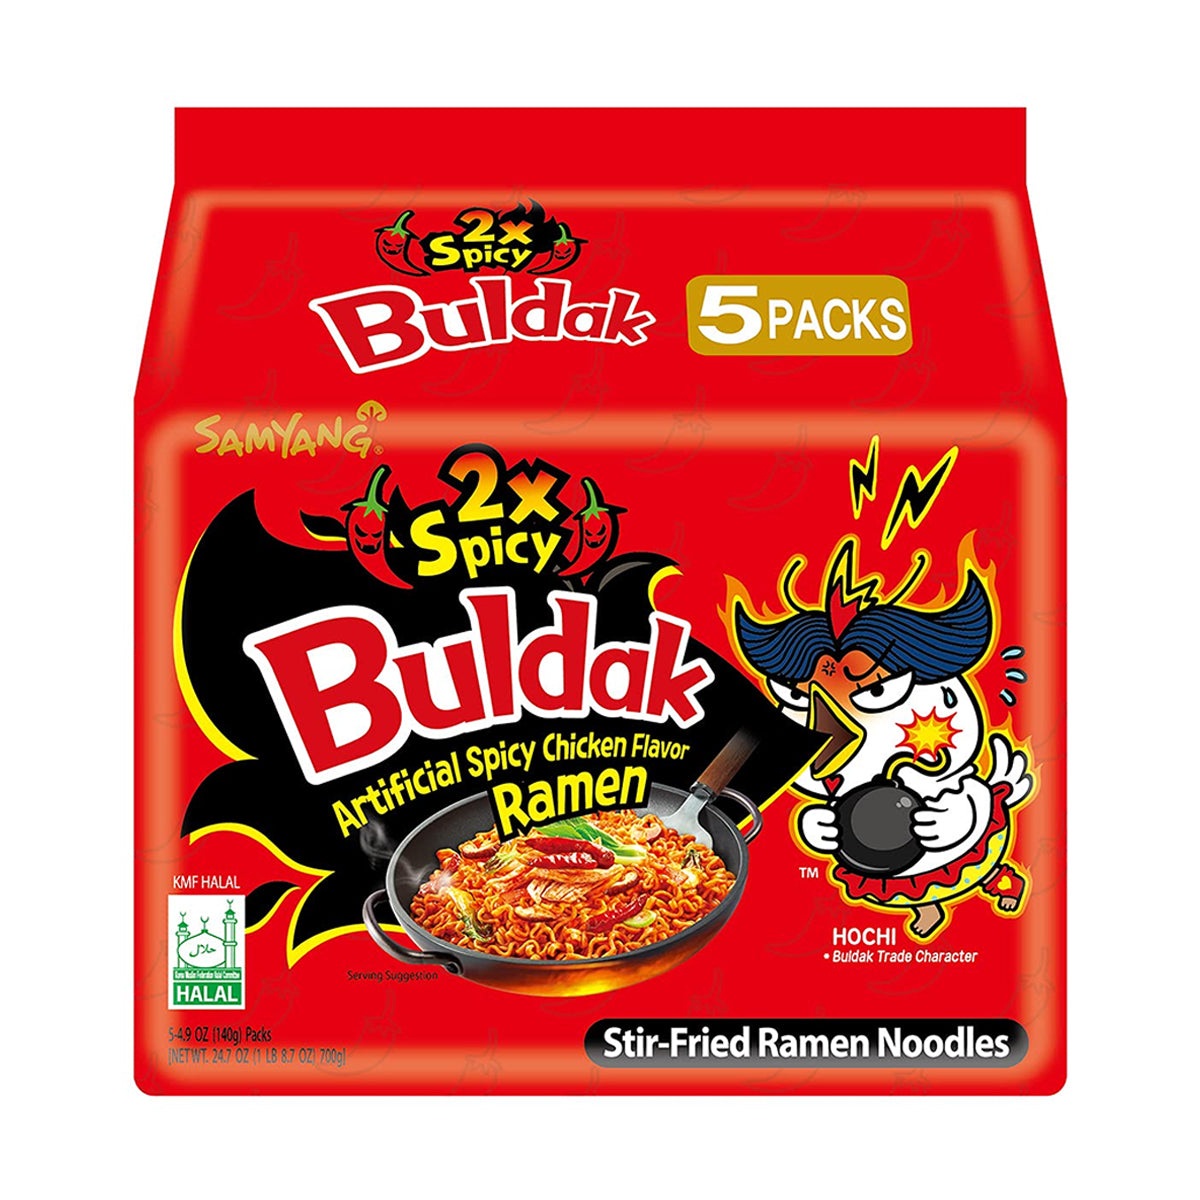 samyang 2x spicy buldak hot chicken flavor ramen 4.94oz - 5pk